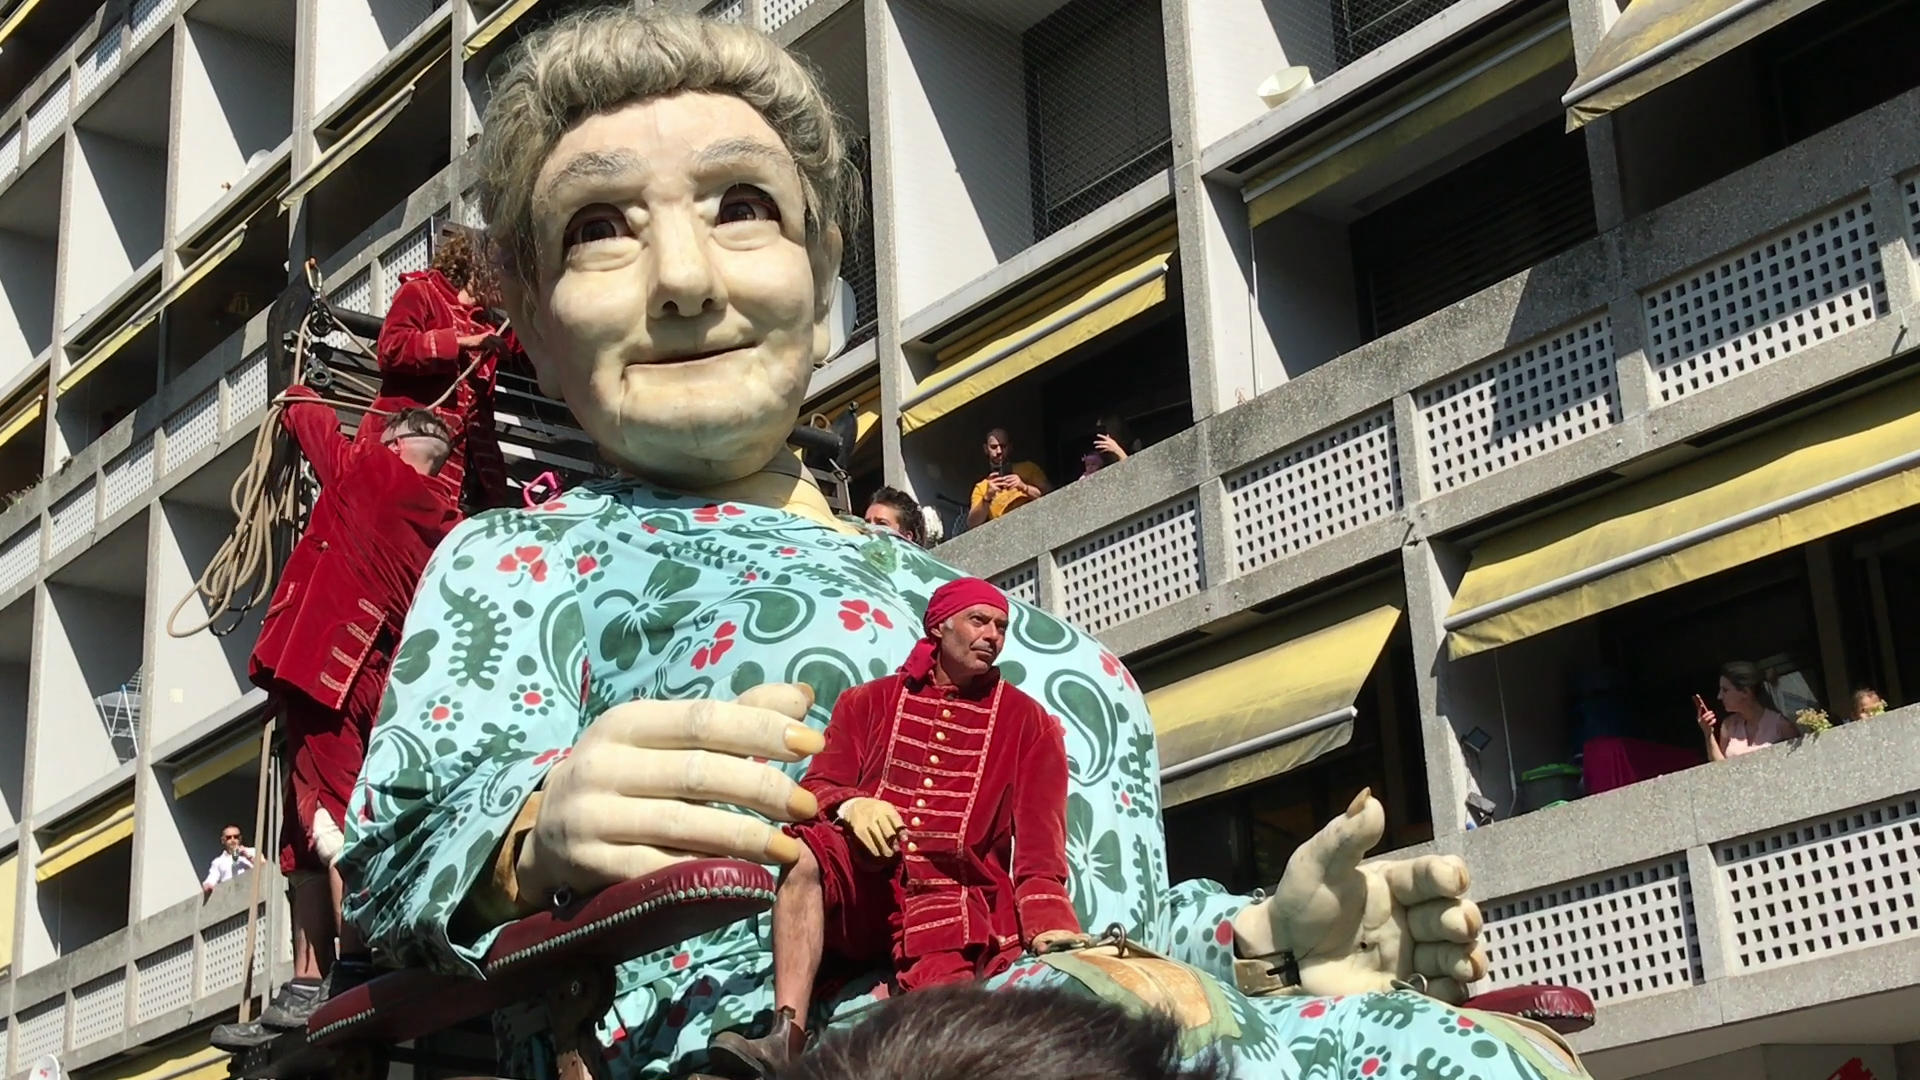 Giant granny puppet